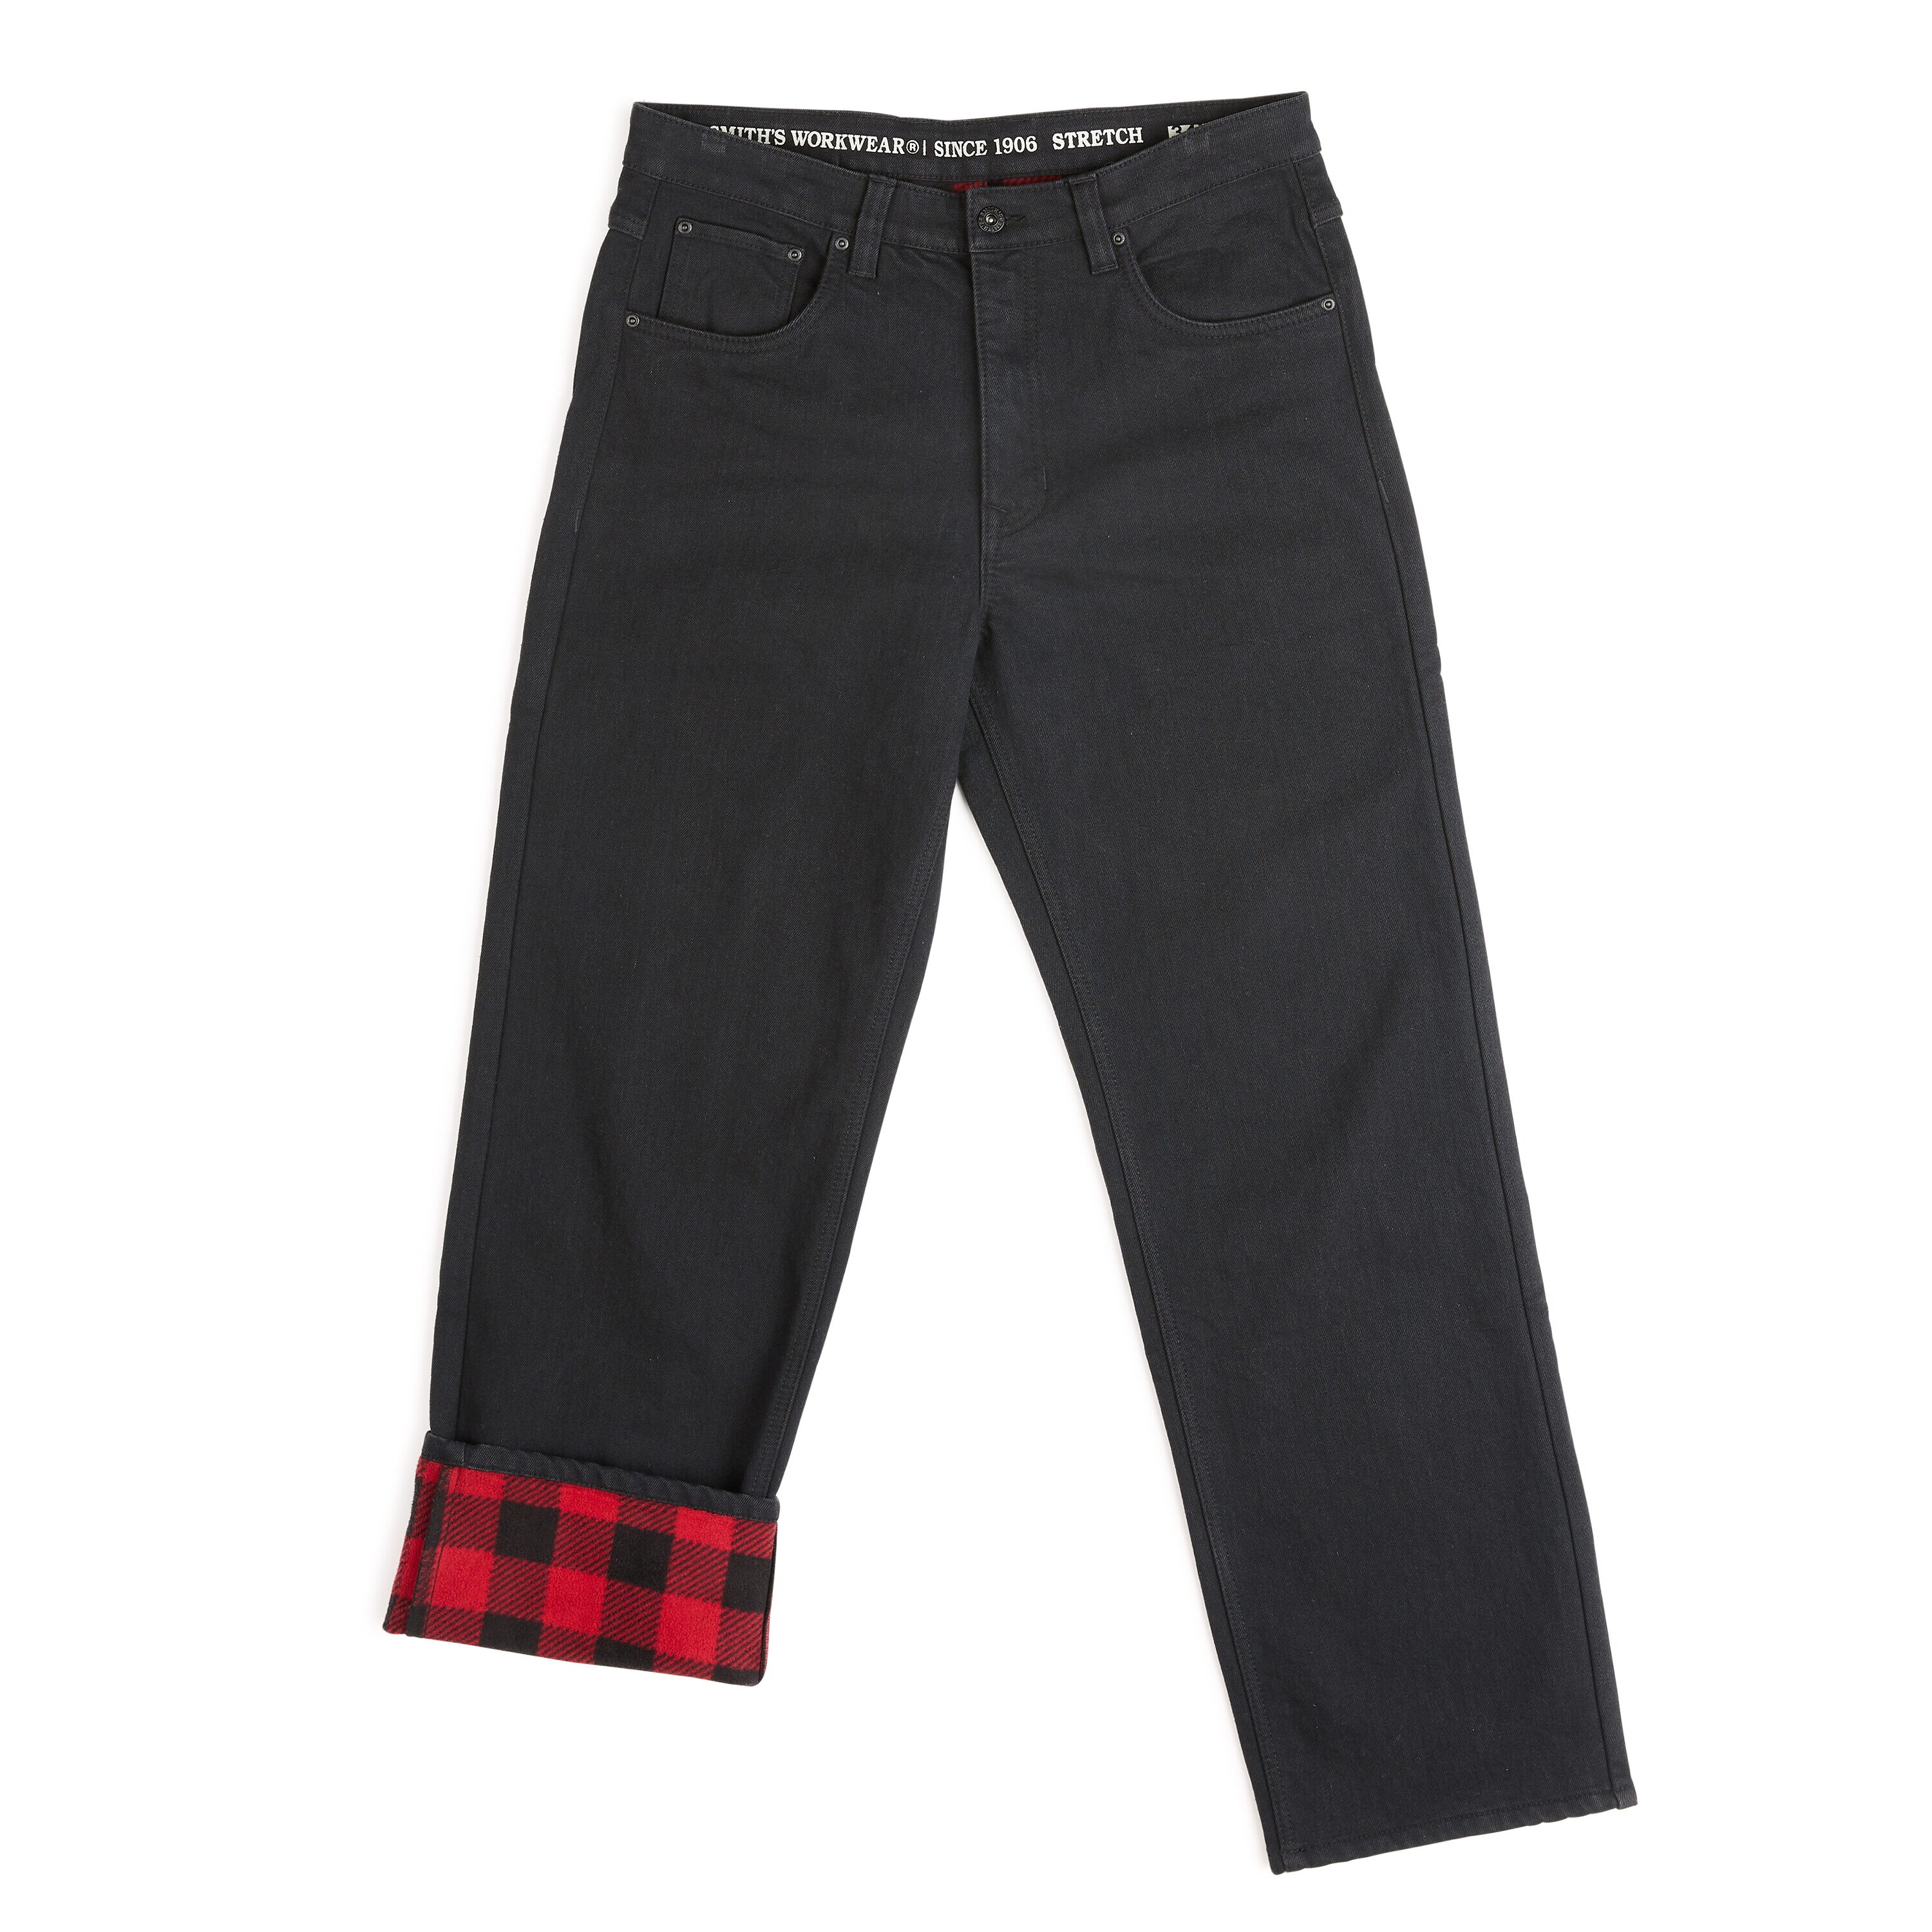 SMITHS WORKWEAR fleece lined jeans pants denim sturdy warm Mens 36